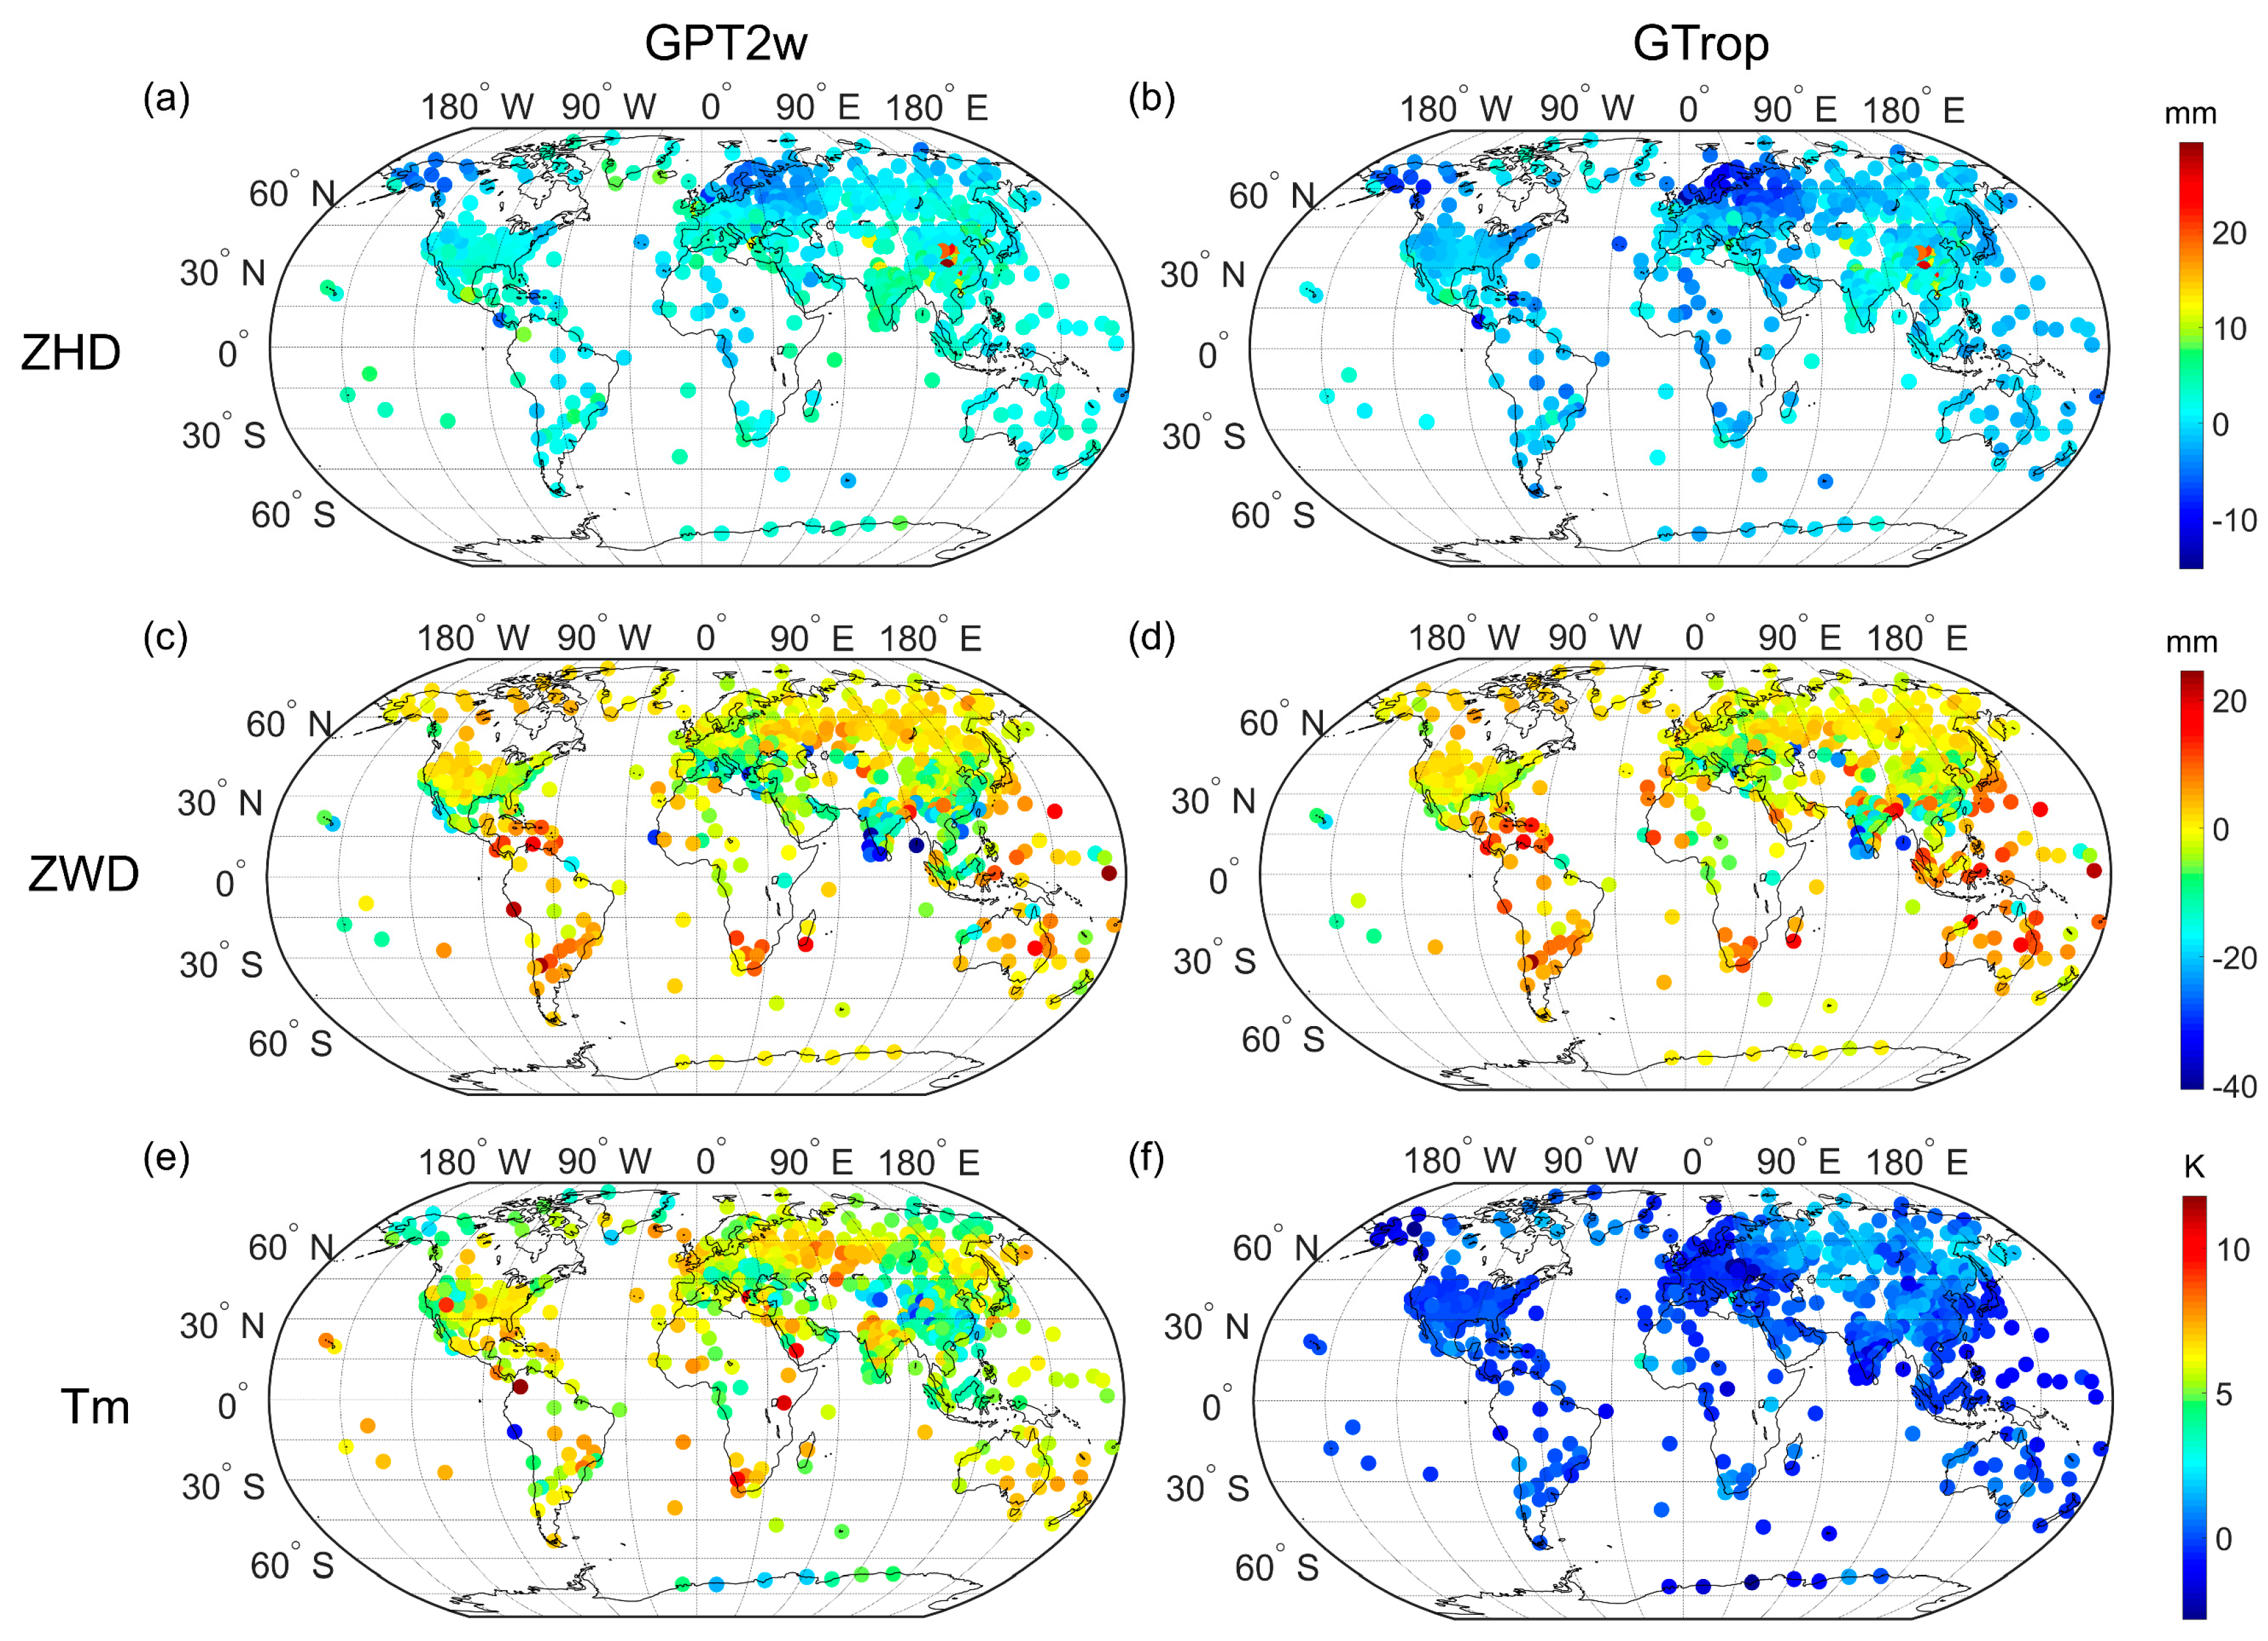 Global bias of GTrop and GPT2w validated by radiosonde data